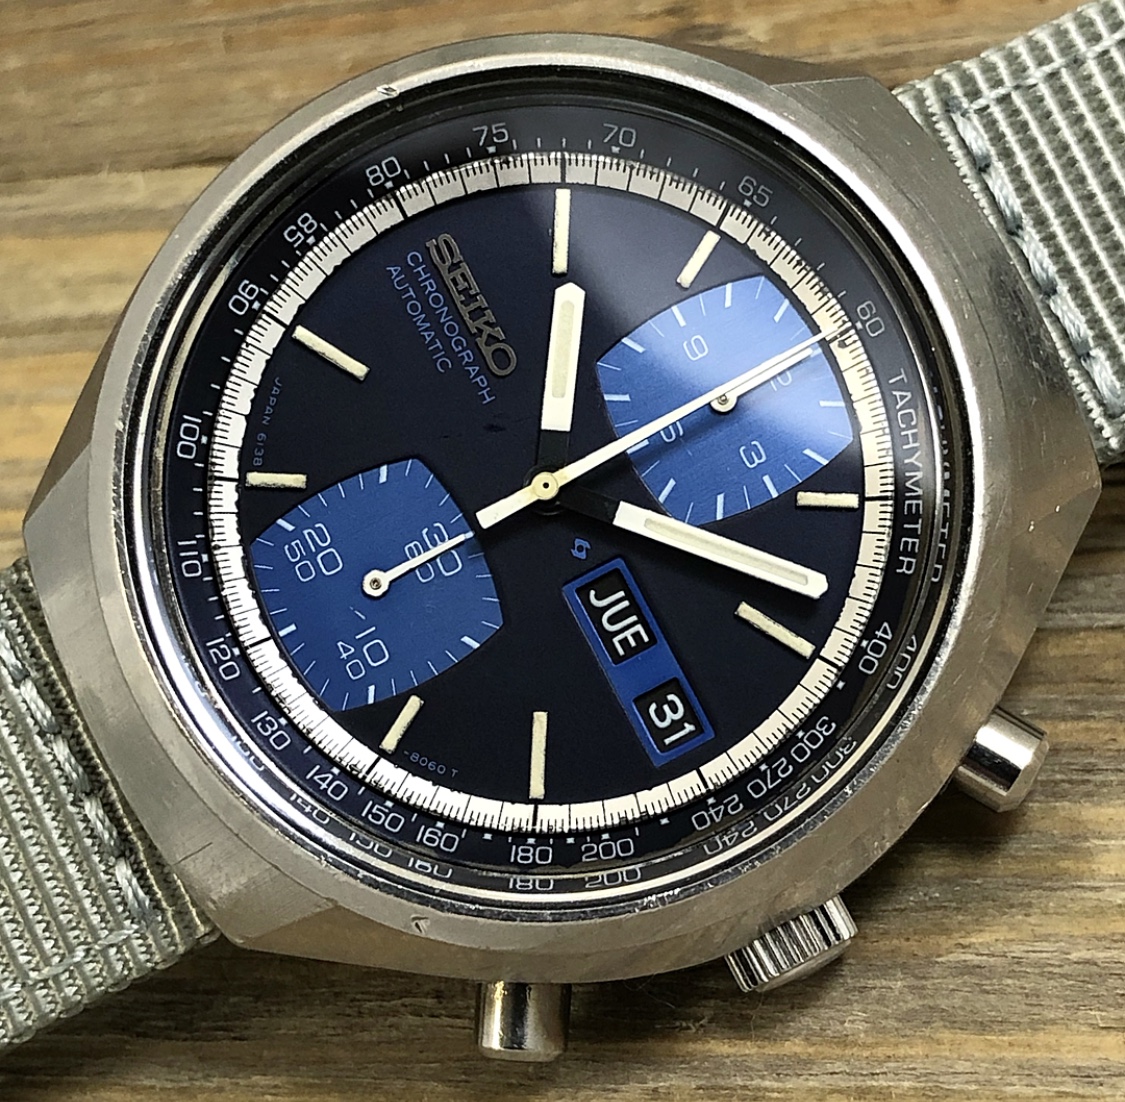 1976 Seiko 6138-8030 Automatic Chronograph “Blue JPS”